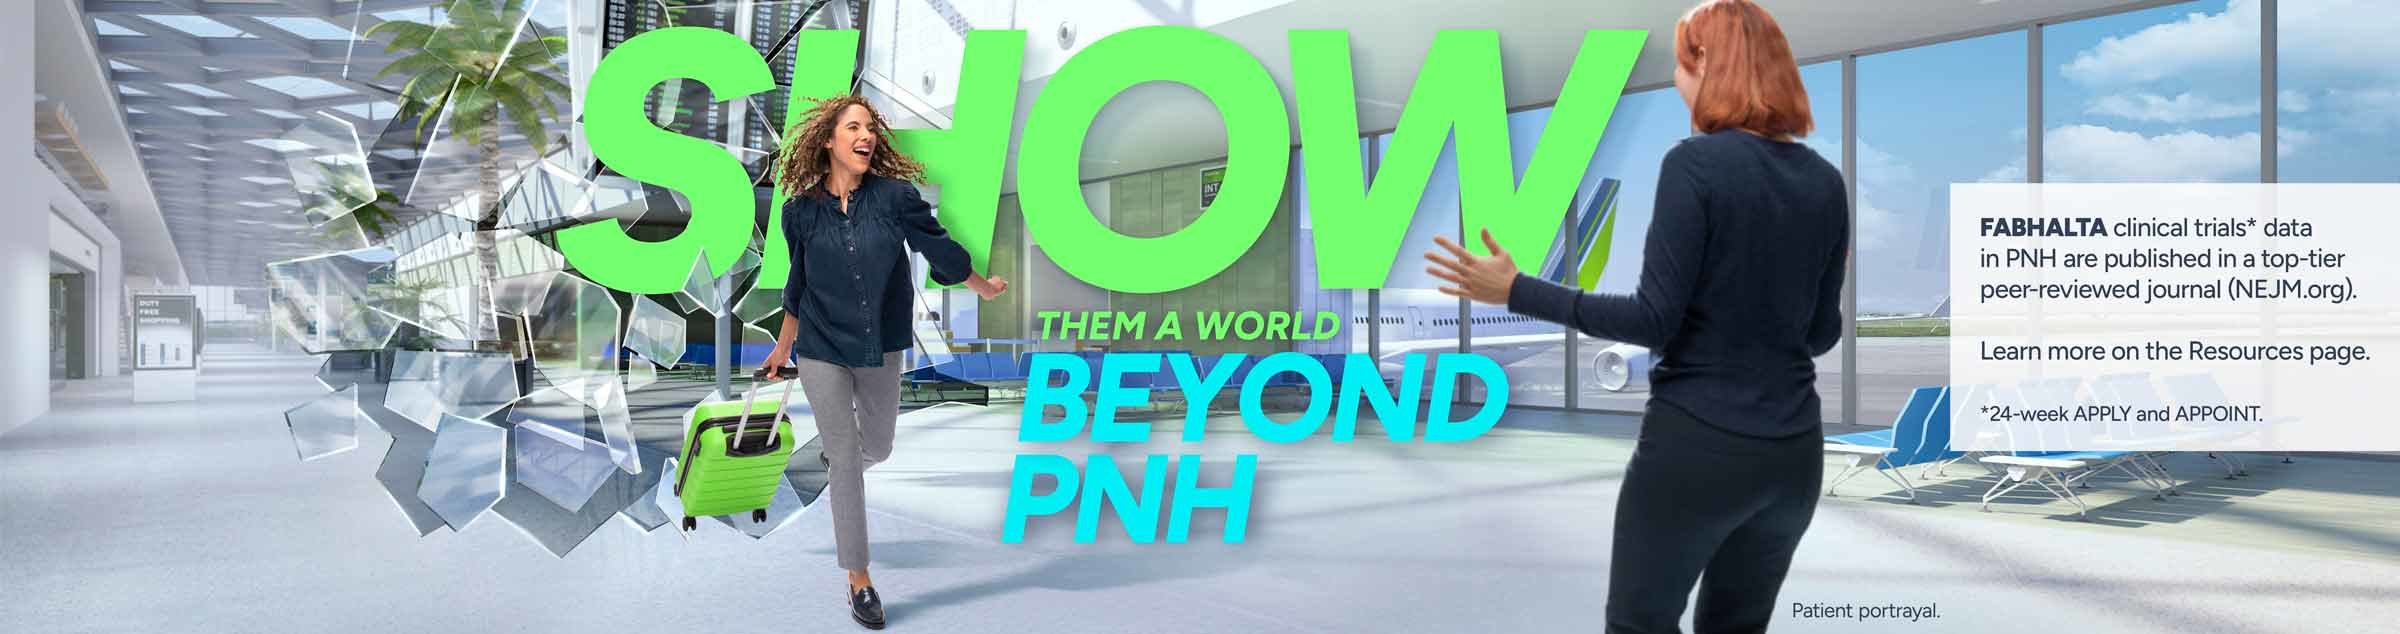 Show them a world beyond PNH.